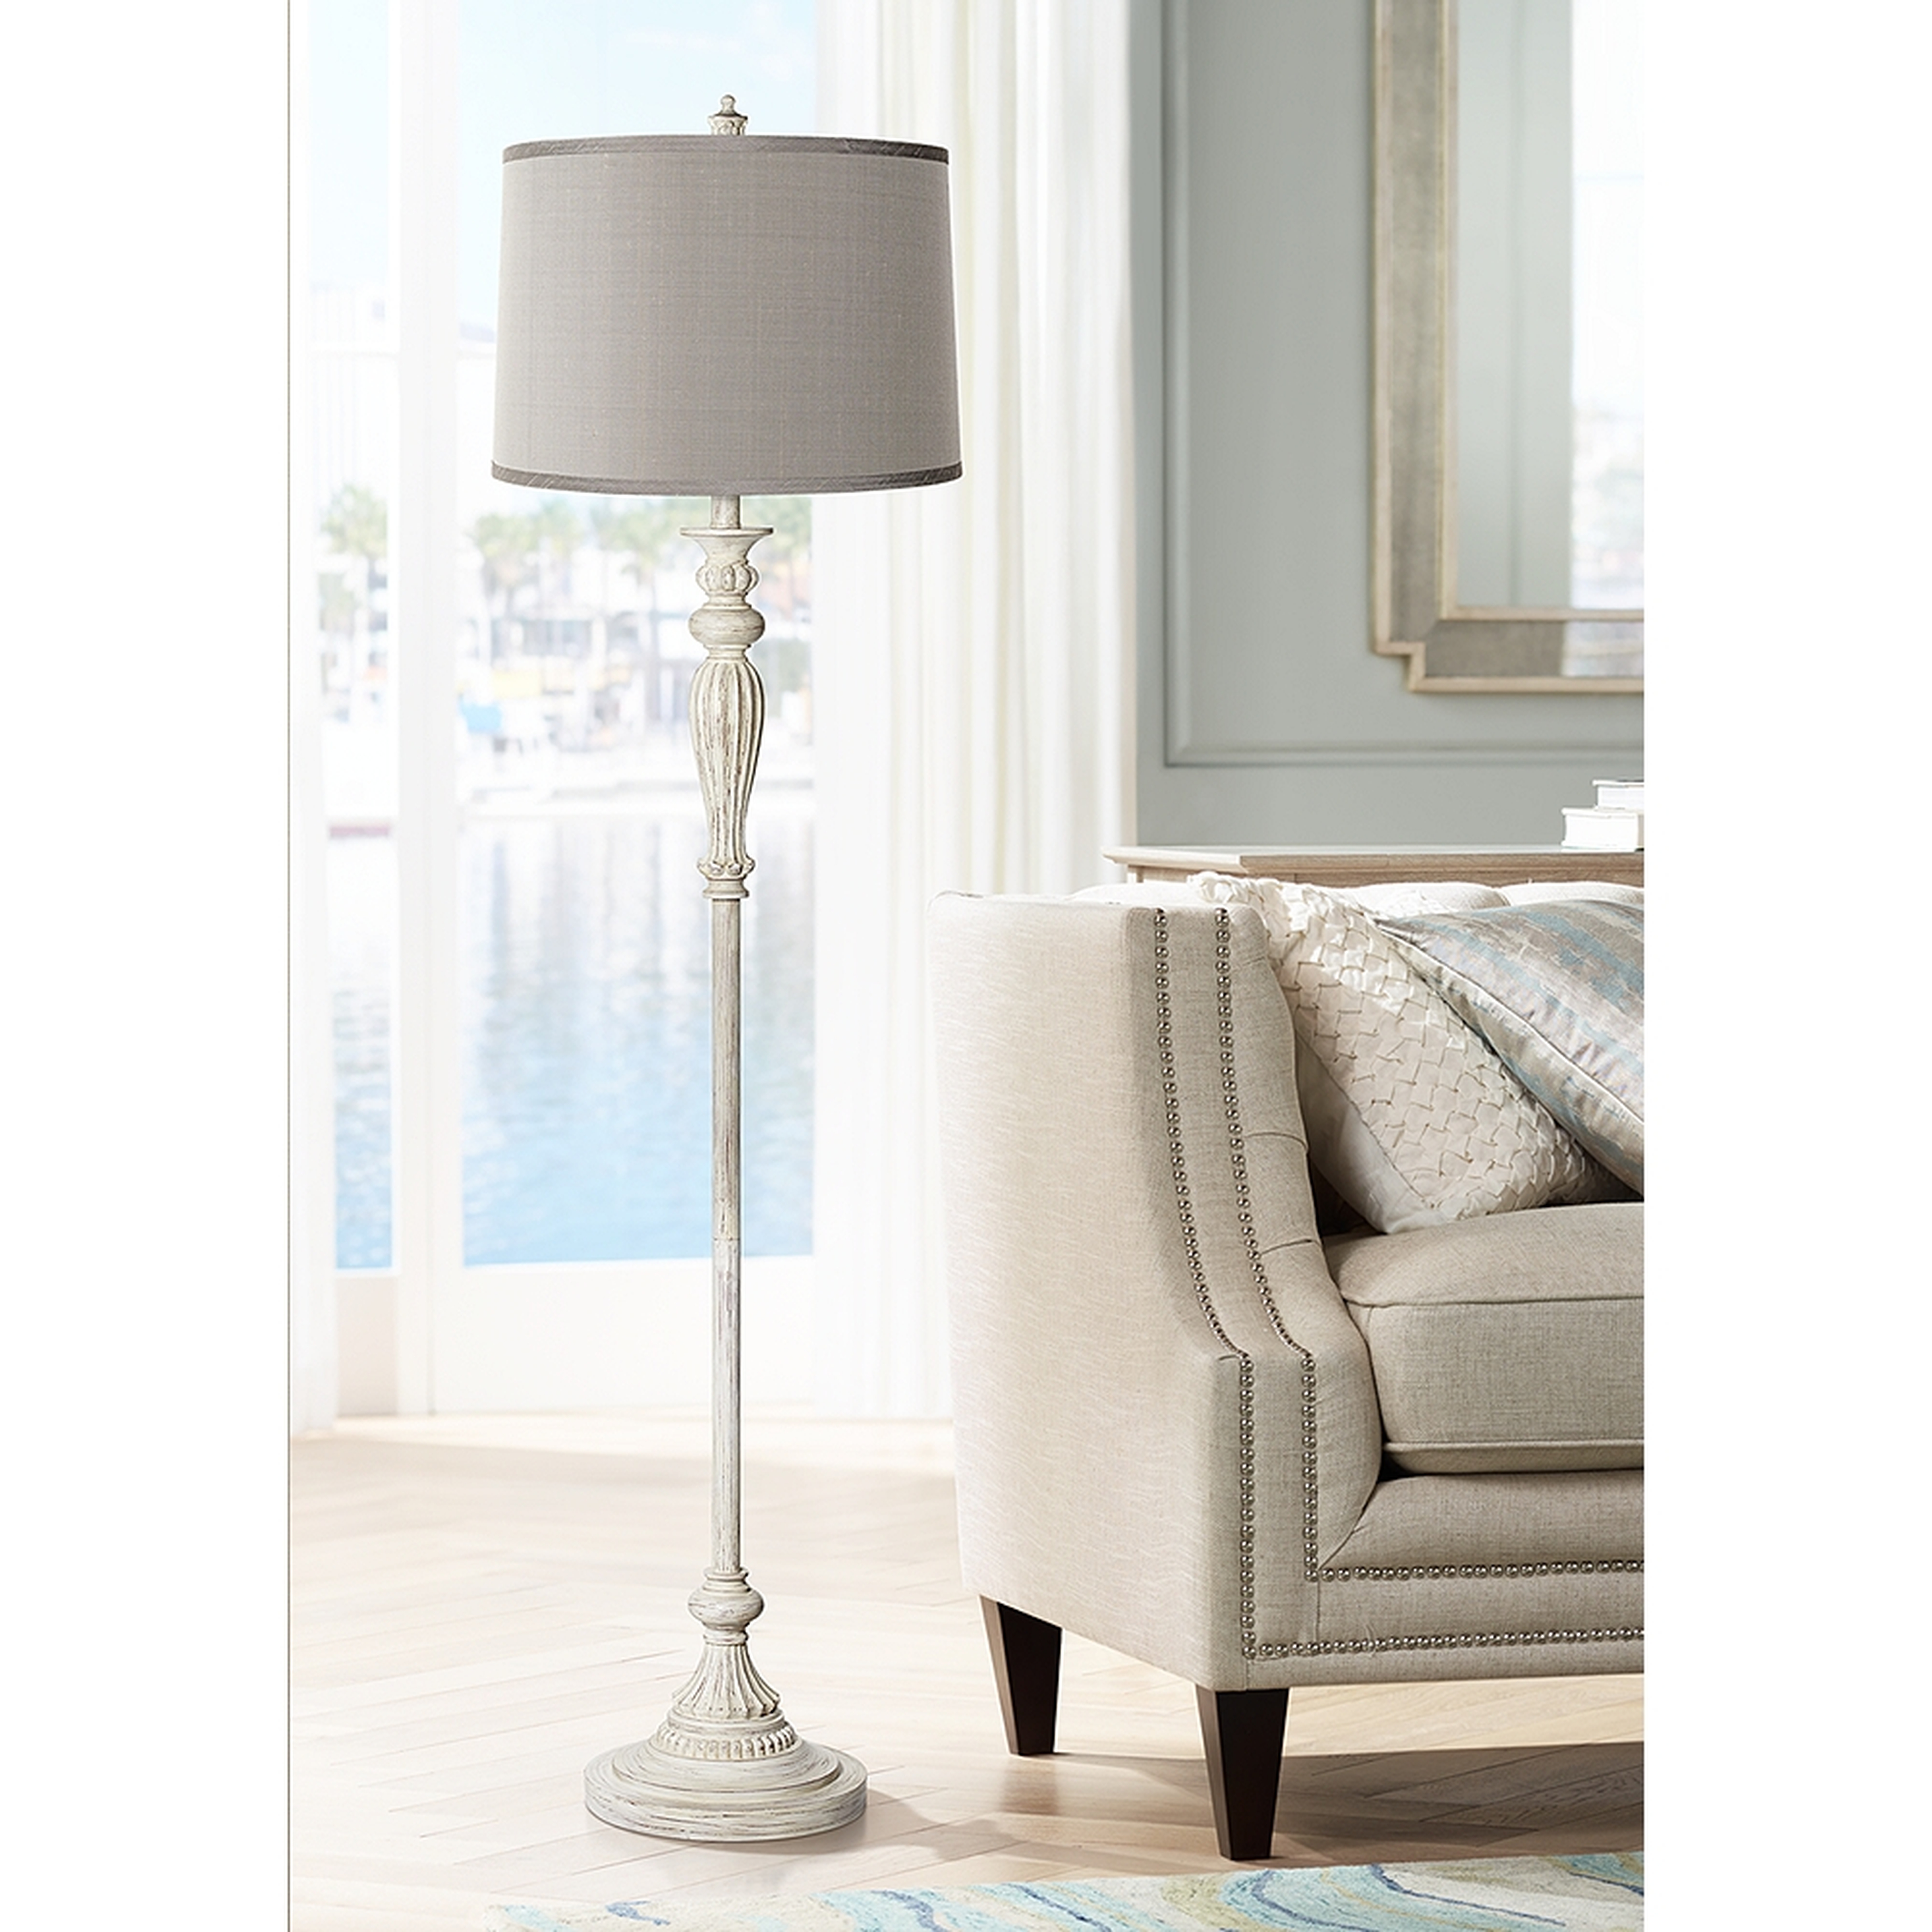 Platinum Gray Shade Vintage Chic Antique White Floor Lamp - Style # 17K23 - Lamps Plus